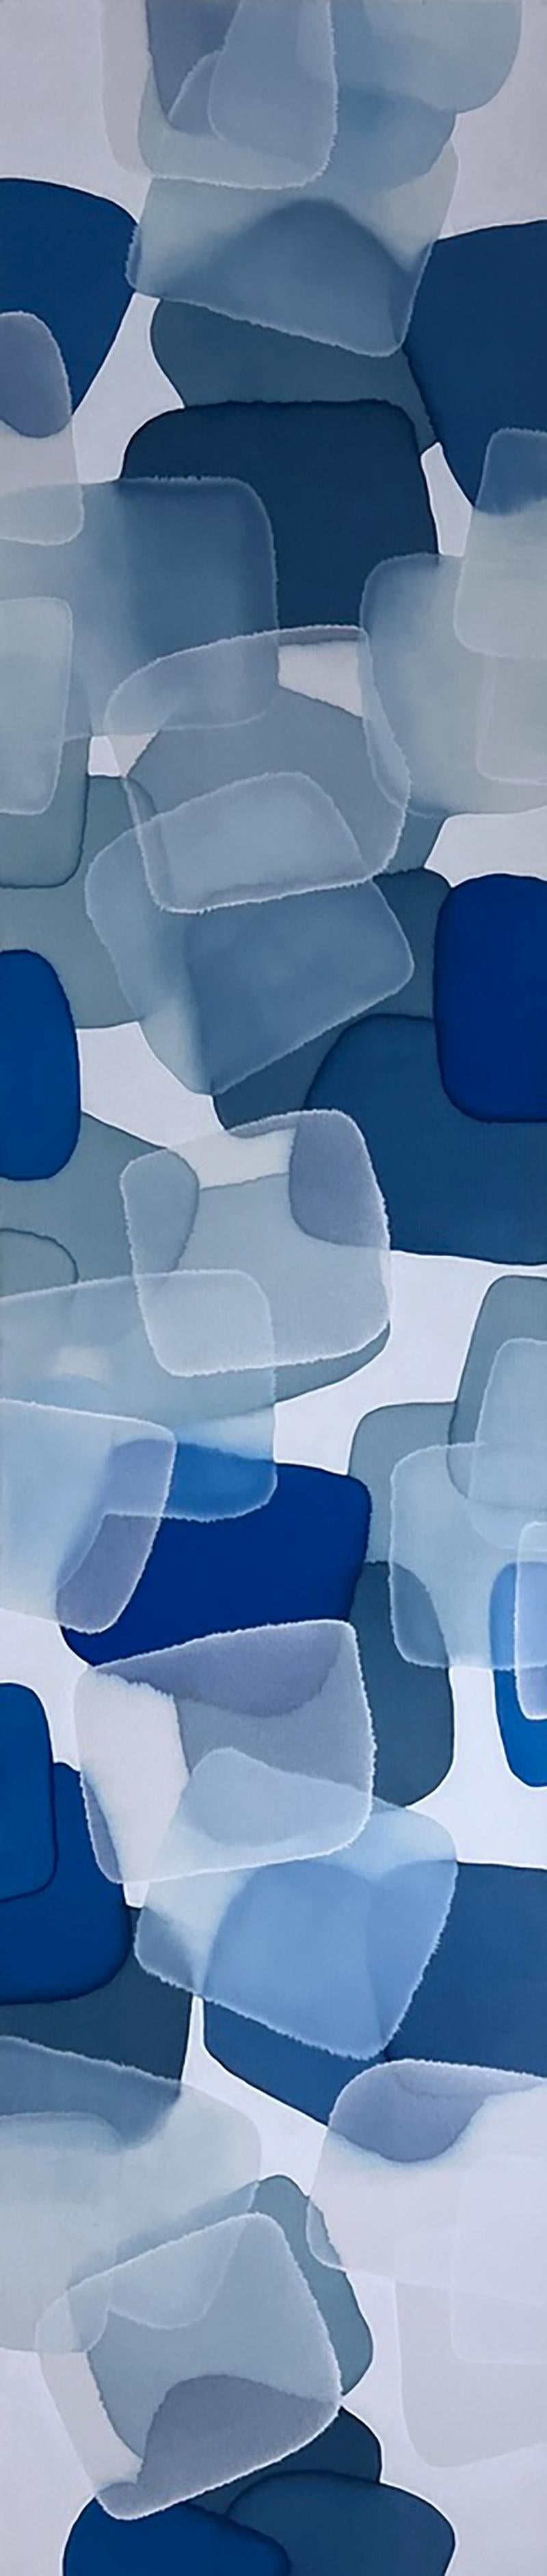 Abstract/Nature/Blue_The Deep Blue Dream_Horizontal/Vertical_Charlie Bluett For Sale 1